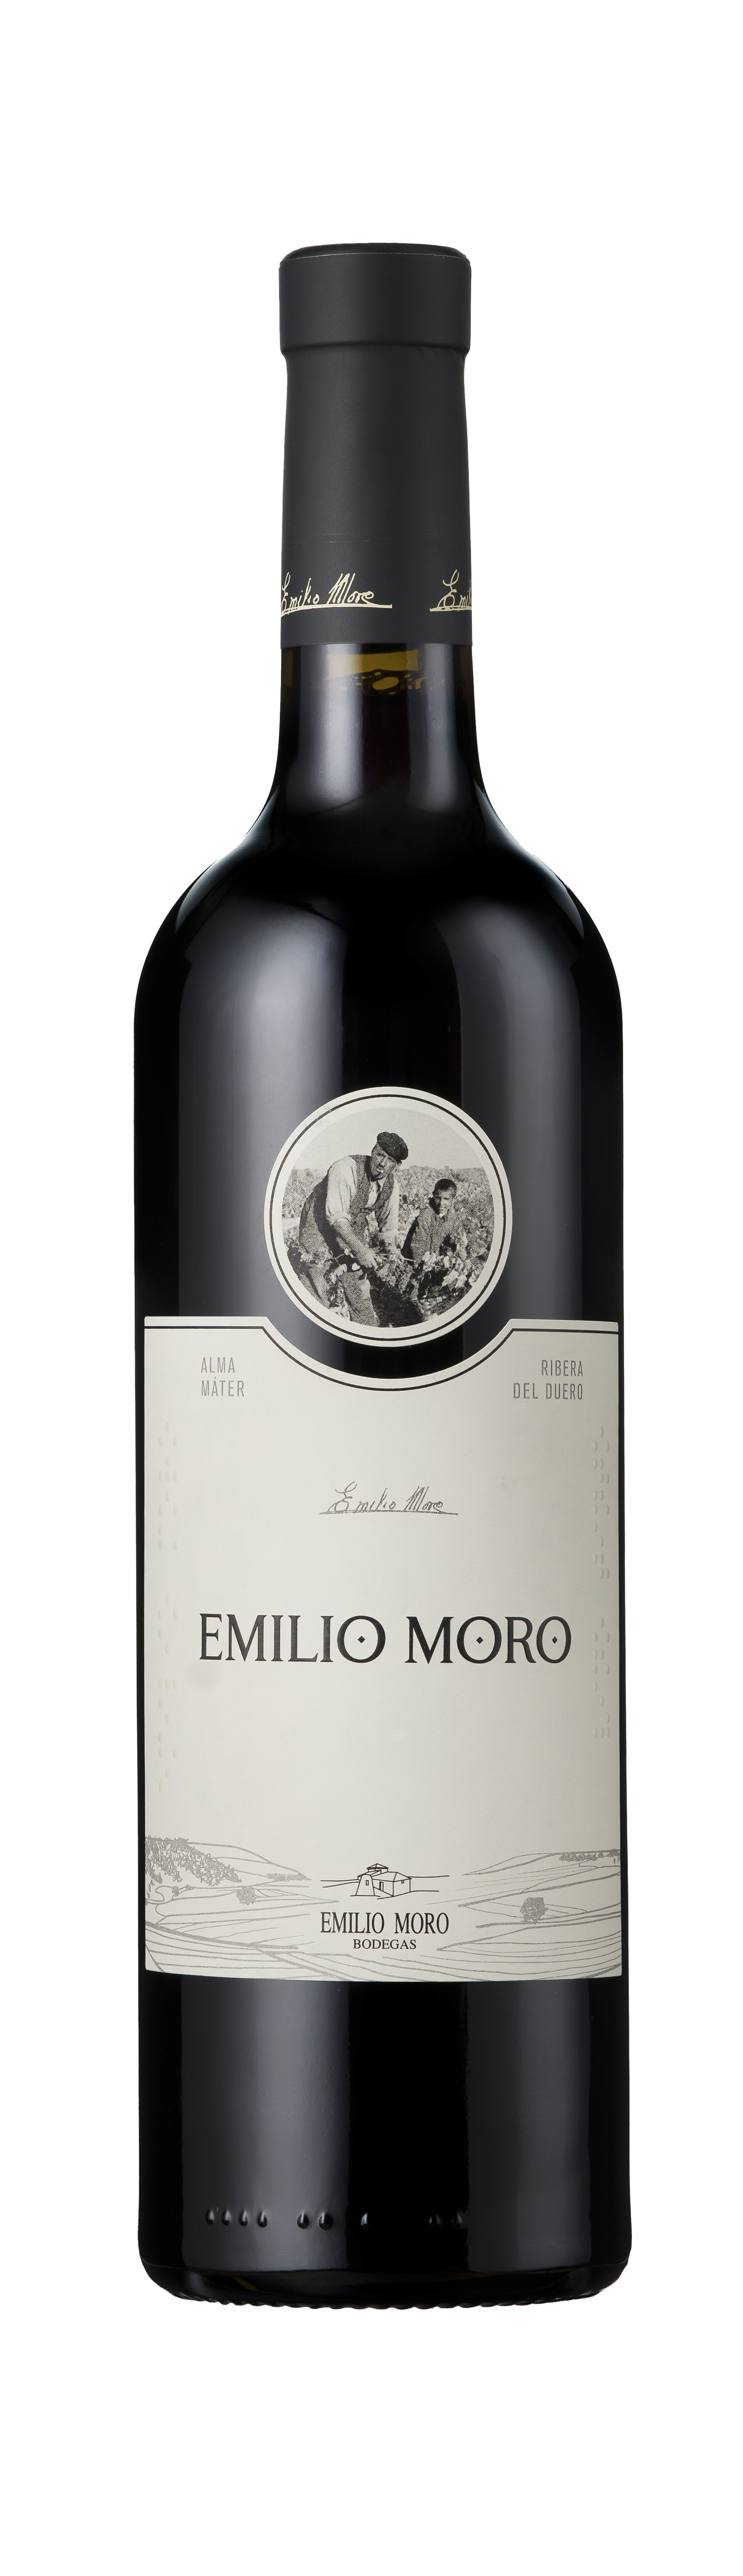 Bottle shot - Bodegas Emilio Moro, Emilio Moro, DO Ribera del Duero, Spain